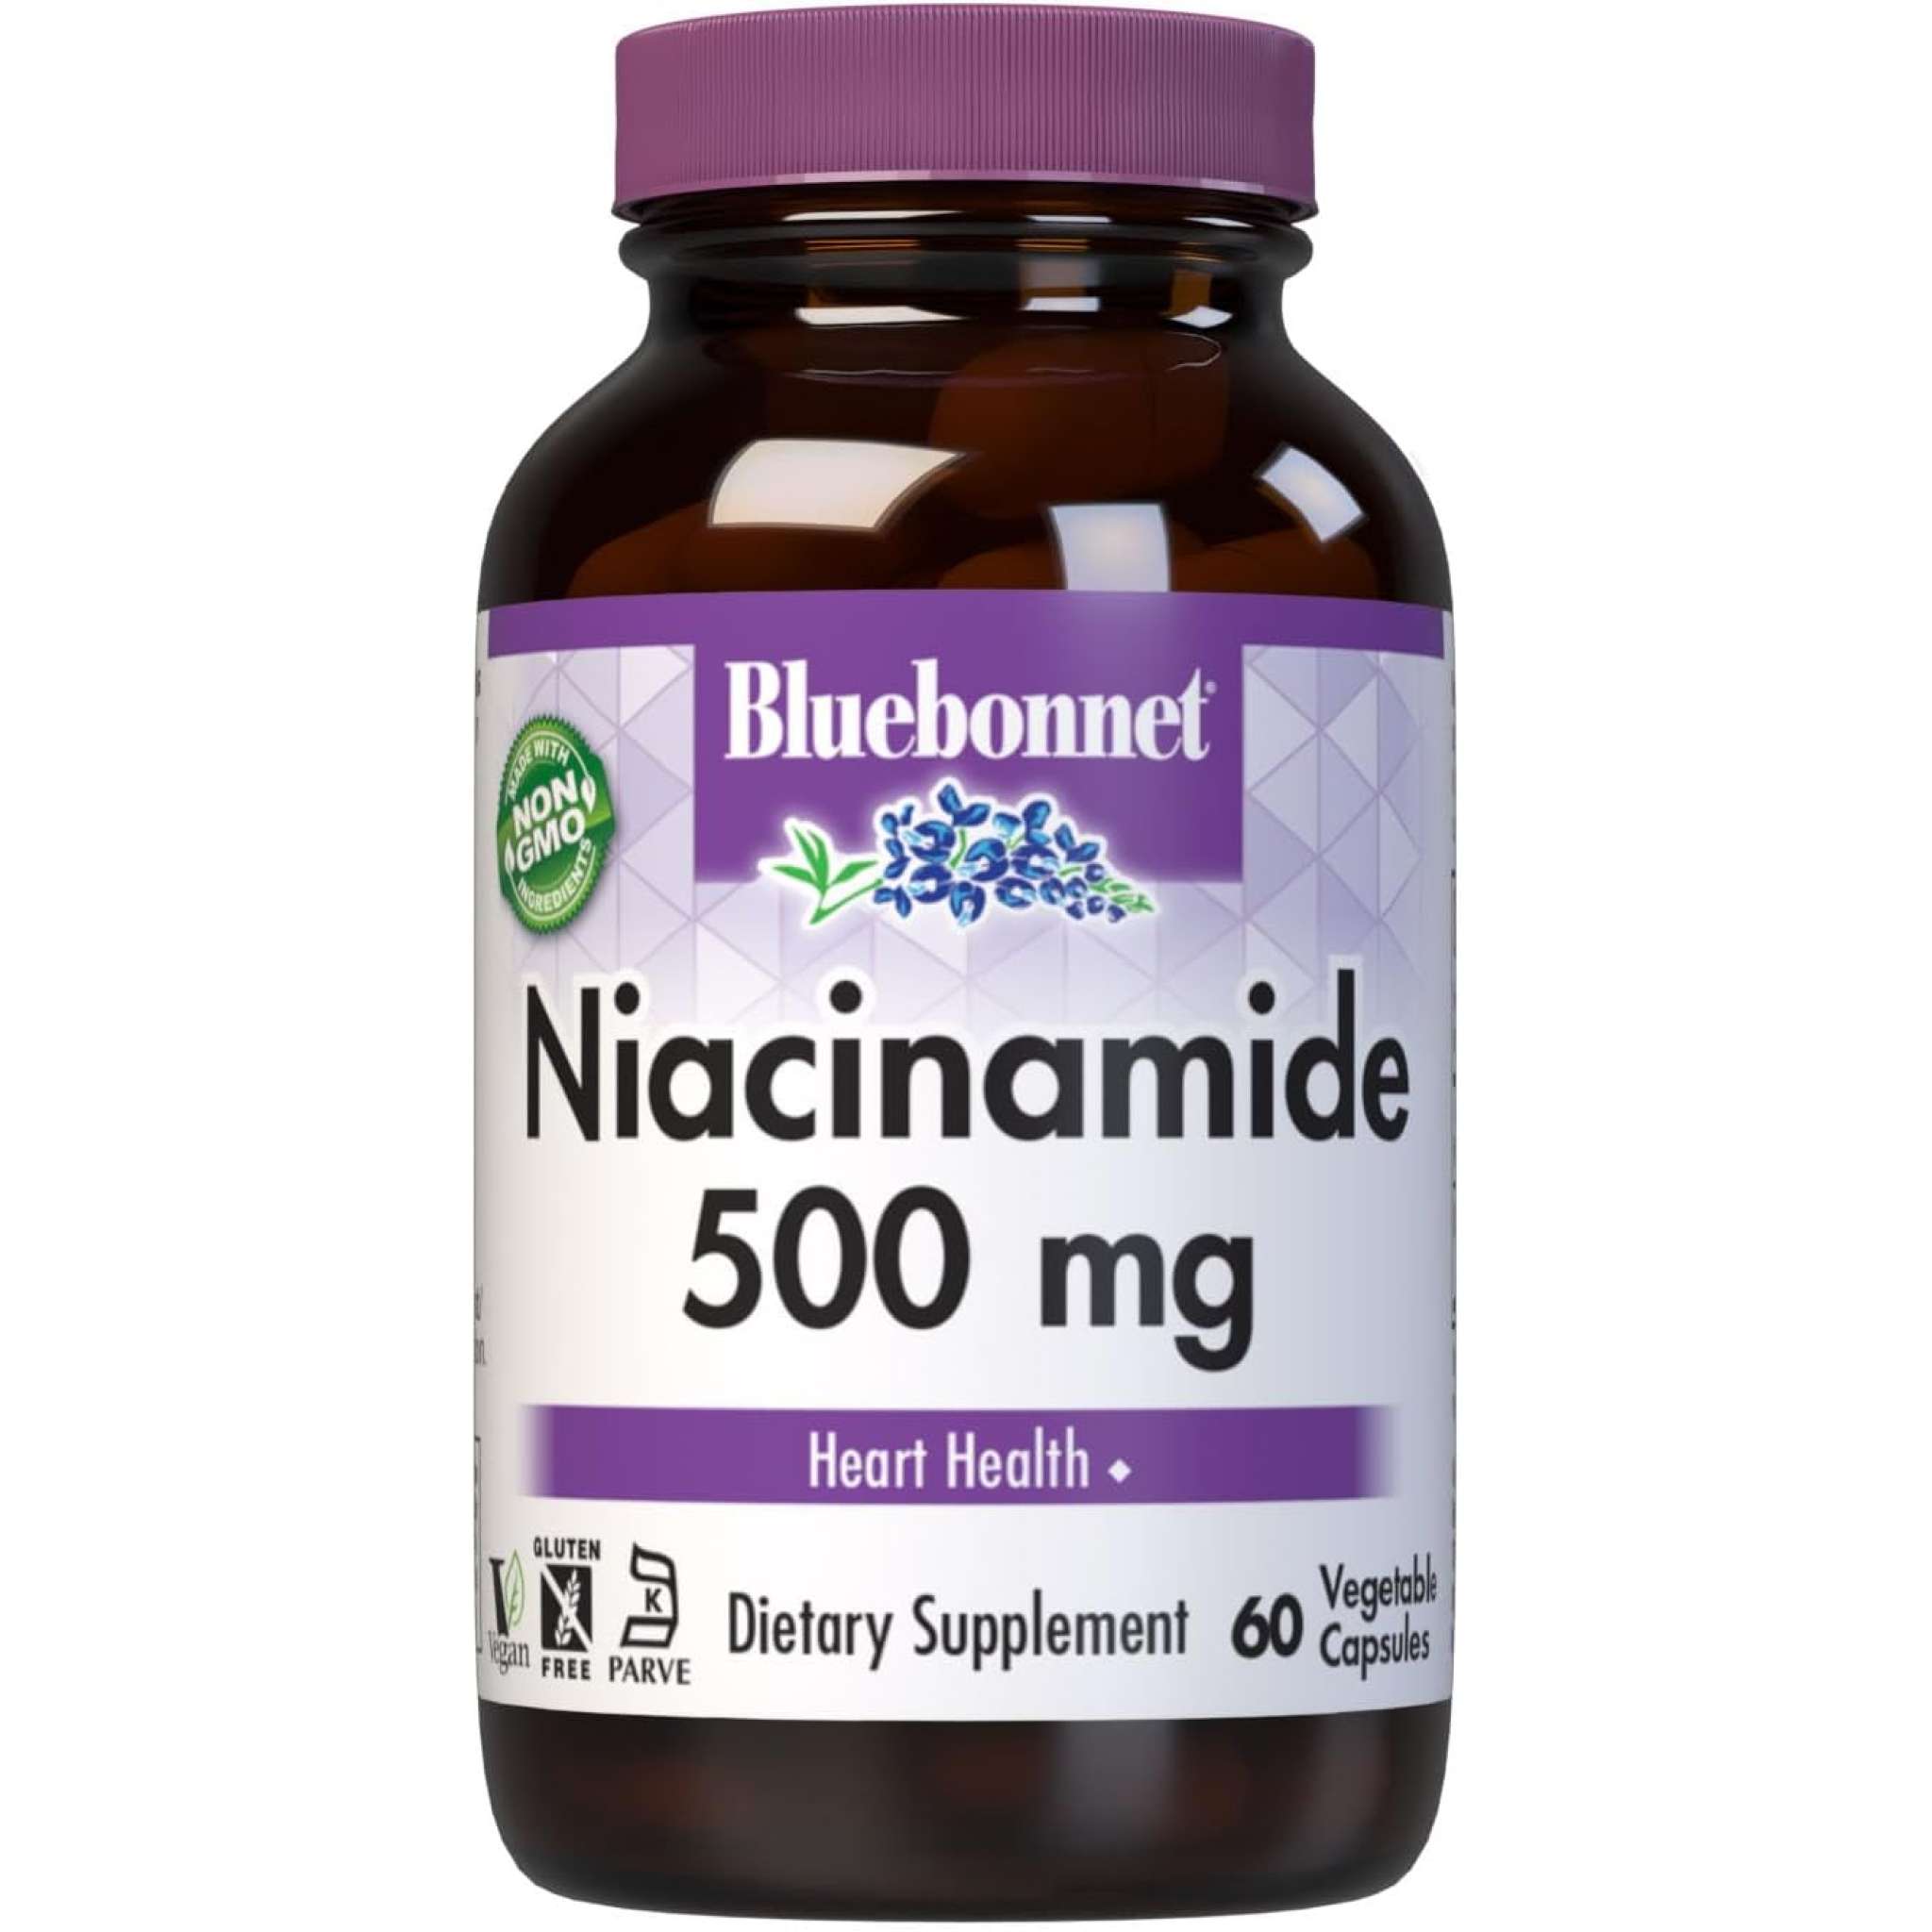 Bluebonnet - Niacinamide 500 mg